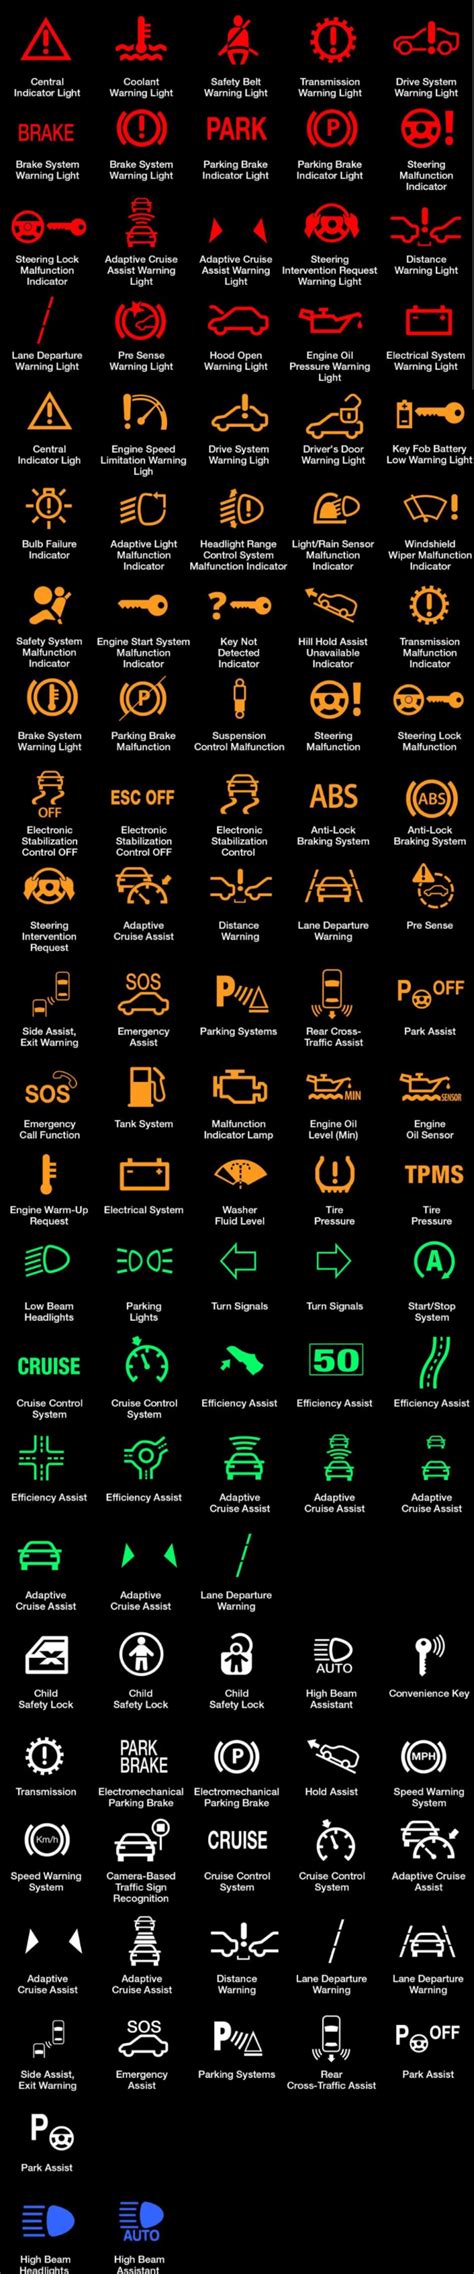 Kia Sorento Warning Lights Kia Sorento Dashboard Symbols Car